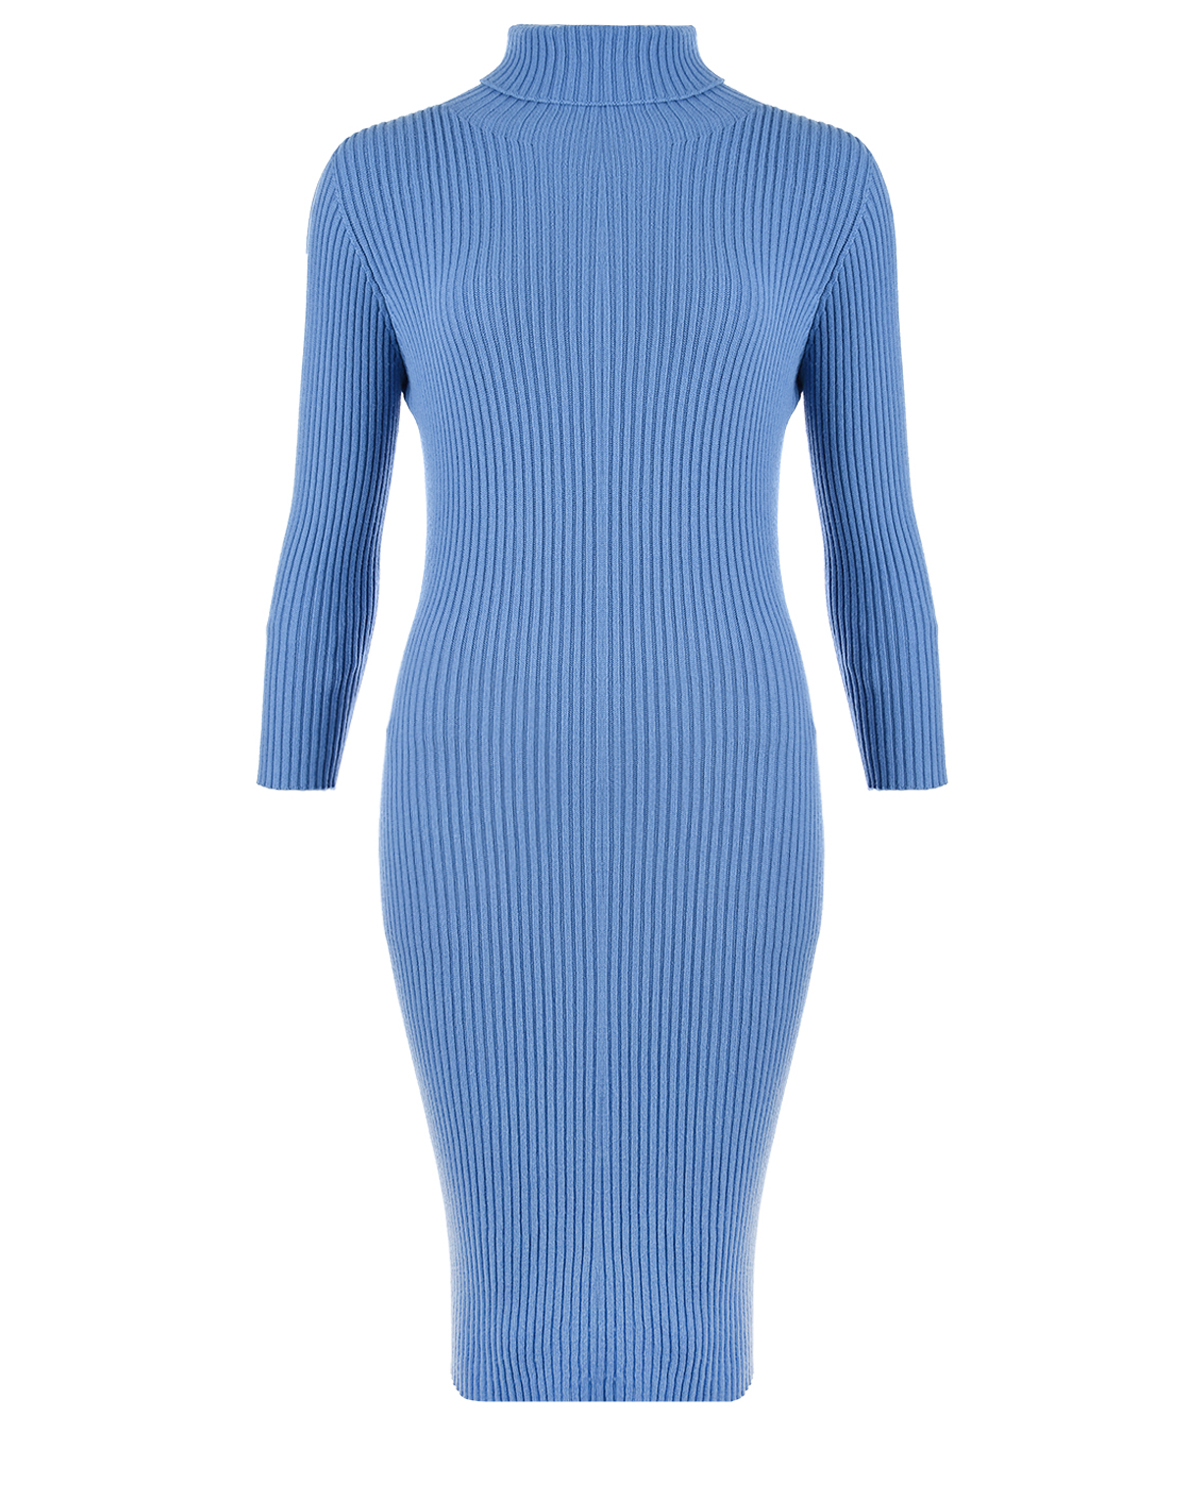 Голубое платье Livigno Pietro Brunelli, размер 42, цвет голубой - фото 1